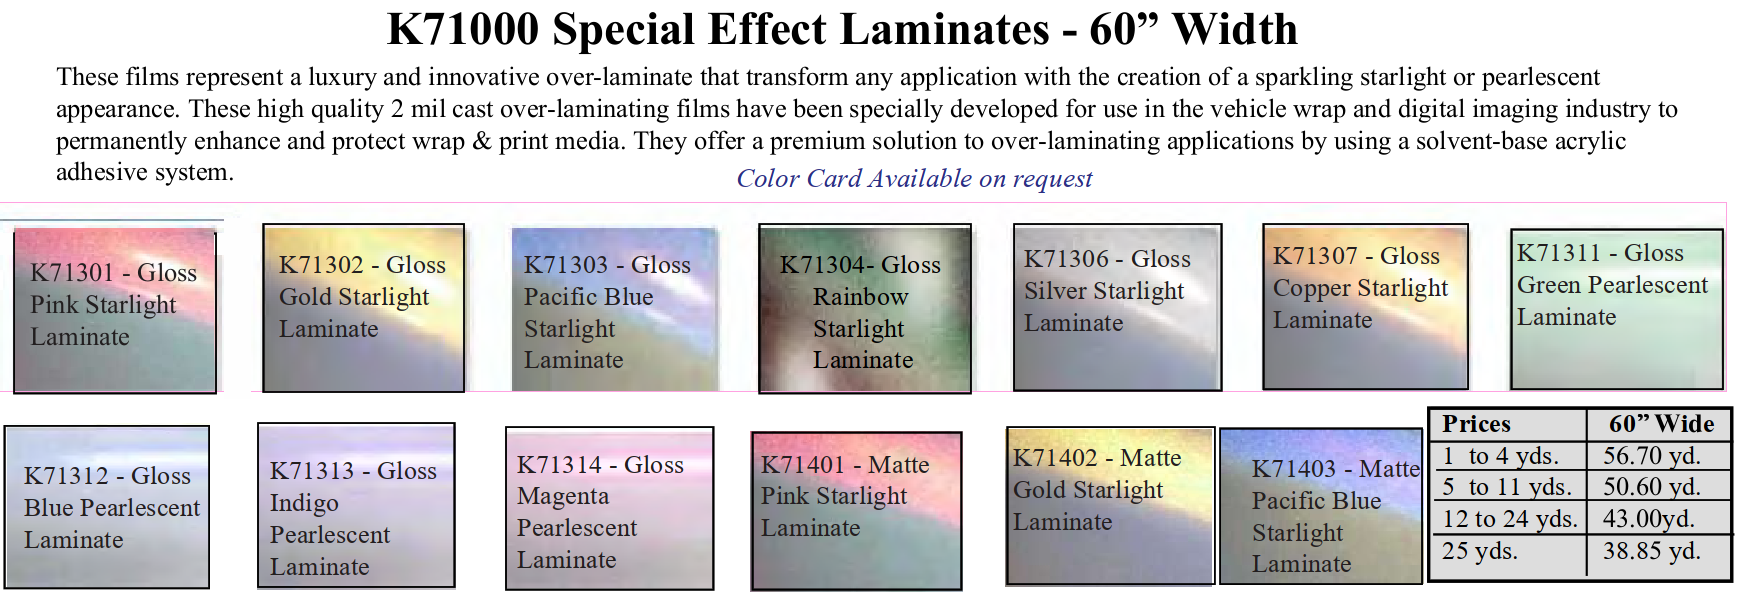 spec. effect laminates aug 2022 - K71000 Special Effect Laminates - 60" Width